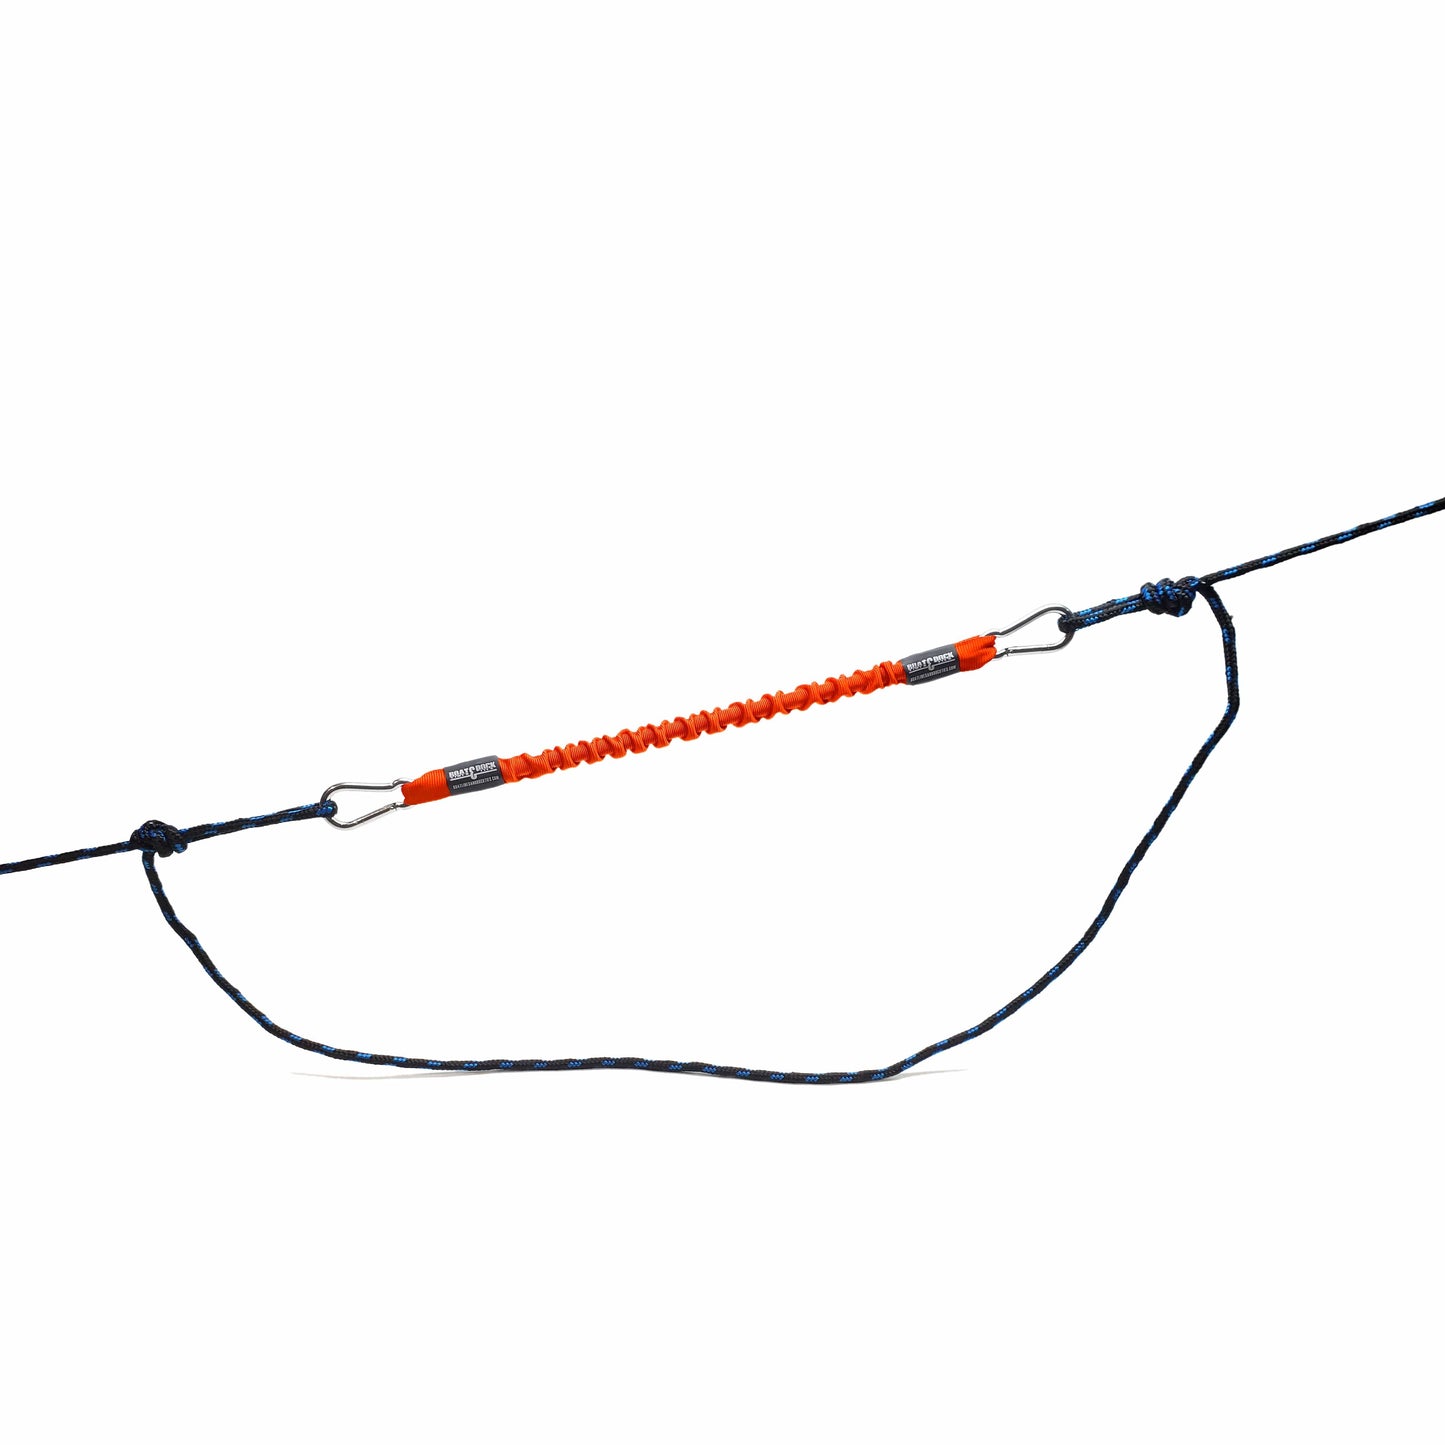 Bungee Snubber Dock Tie Line - With Stainless Steel Hooks - 1 per pack - Boat Lines & Dock Ties Boat Lines & Dock Ties 24inch / Orange